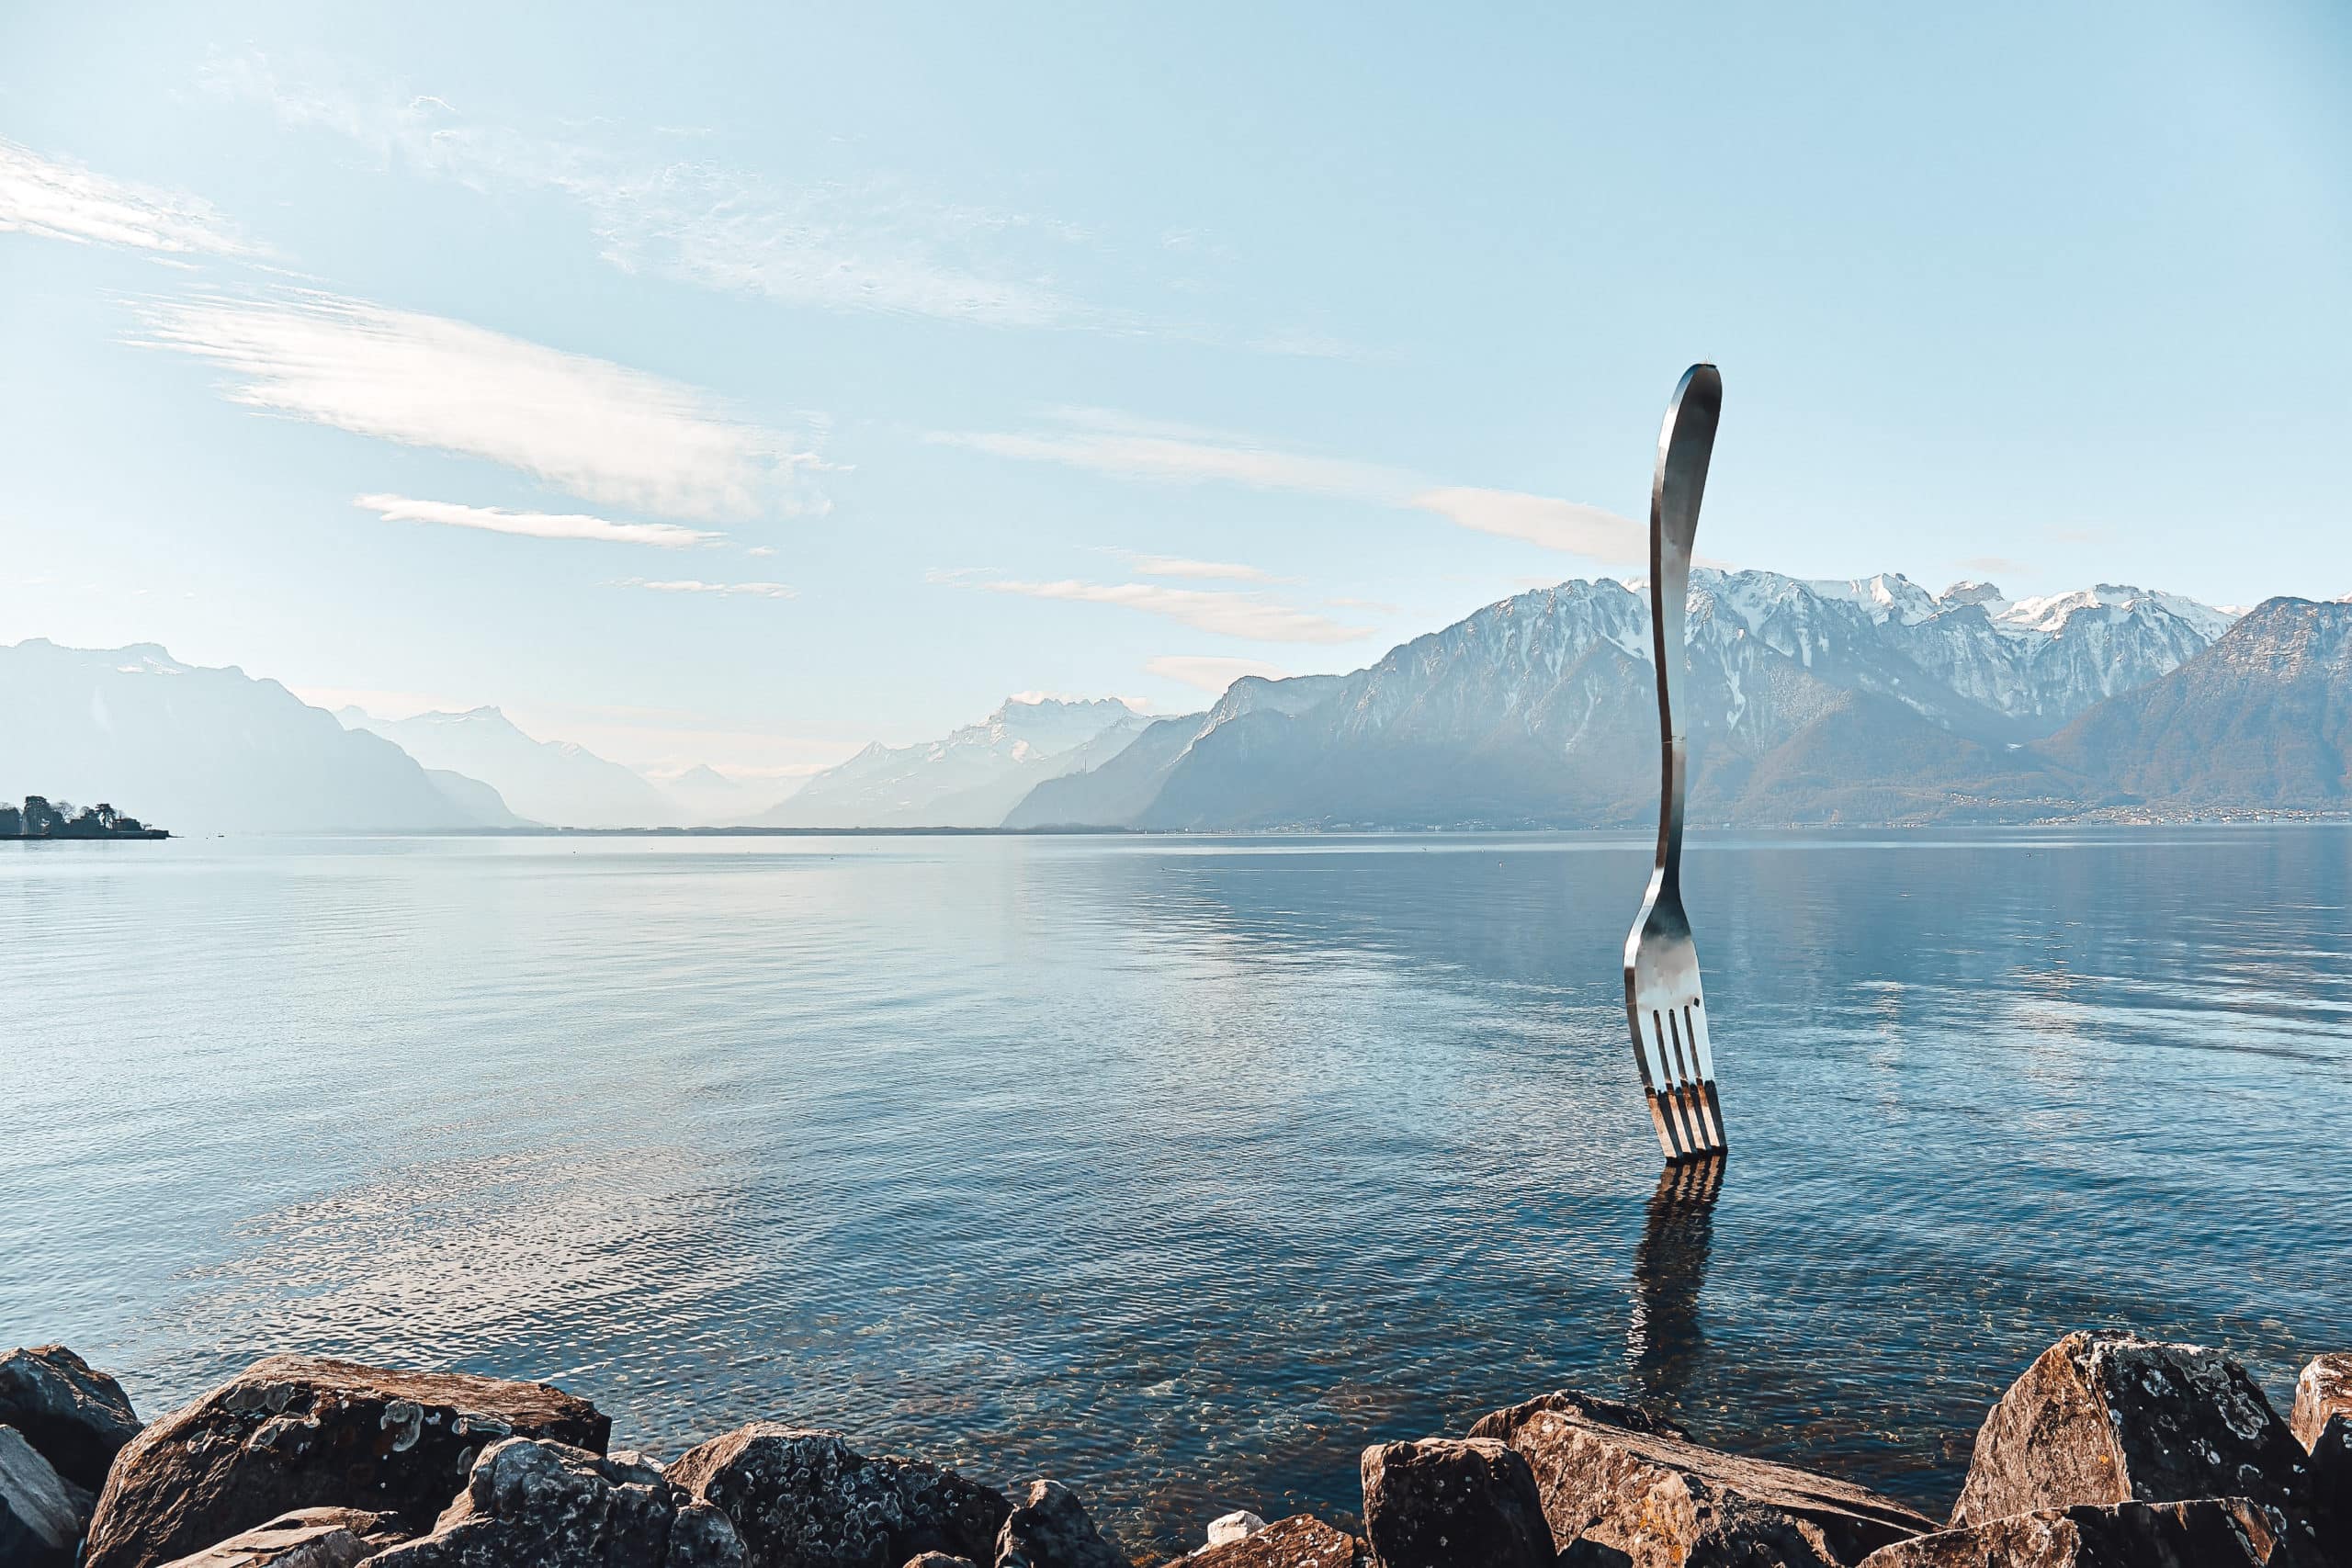 The Fork of Vevey in Lake Geneva, Switzerland